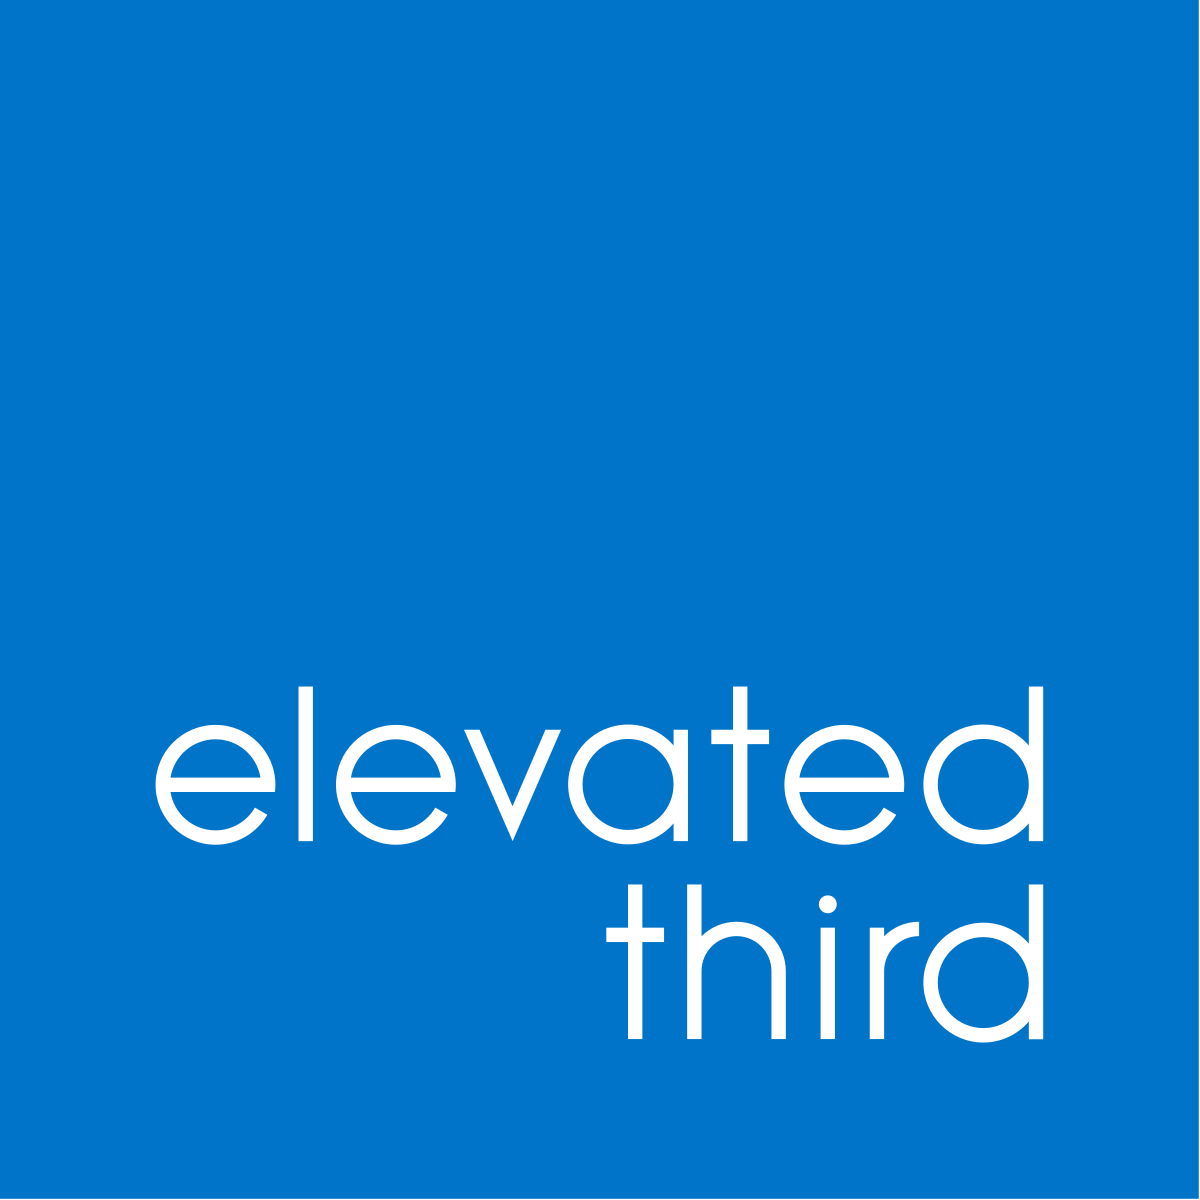 Elevated Third logo